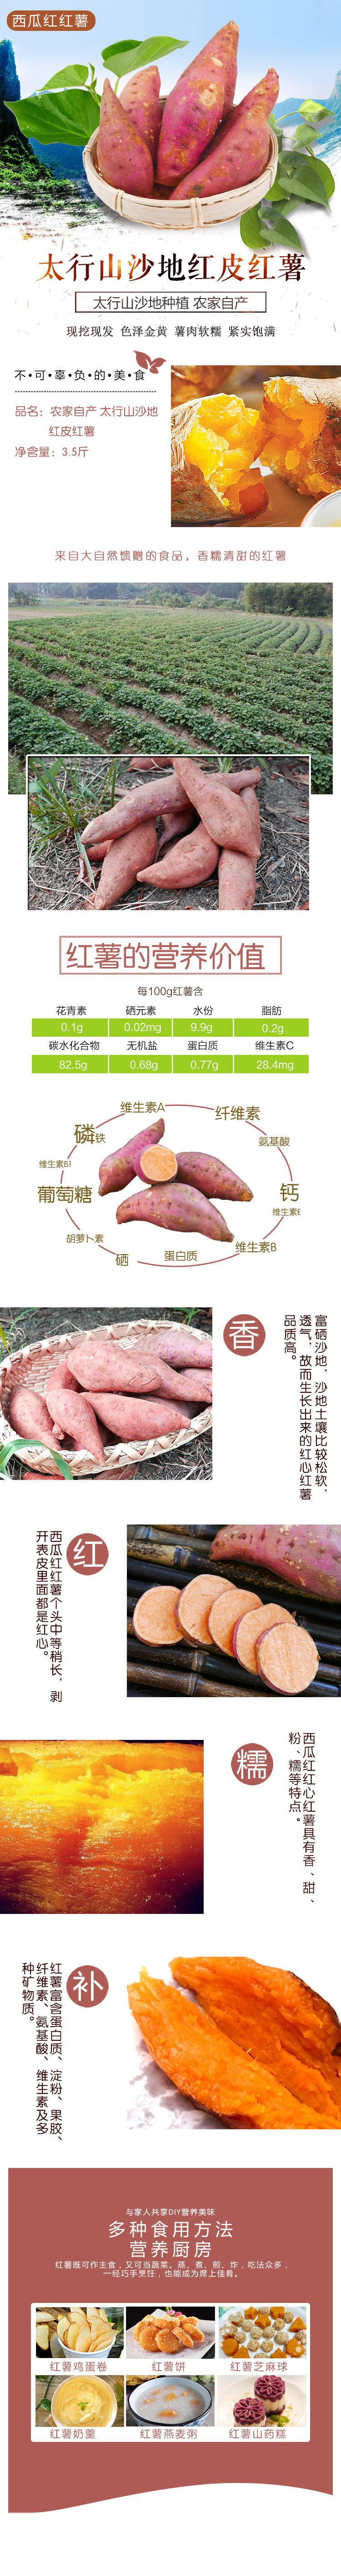 H919 农家自产 红薯太行山沙地红皮红心西瓜红 红薯3.5斤 新鲜现挖小香薯板栗红薯迷你小地瓜